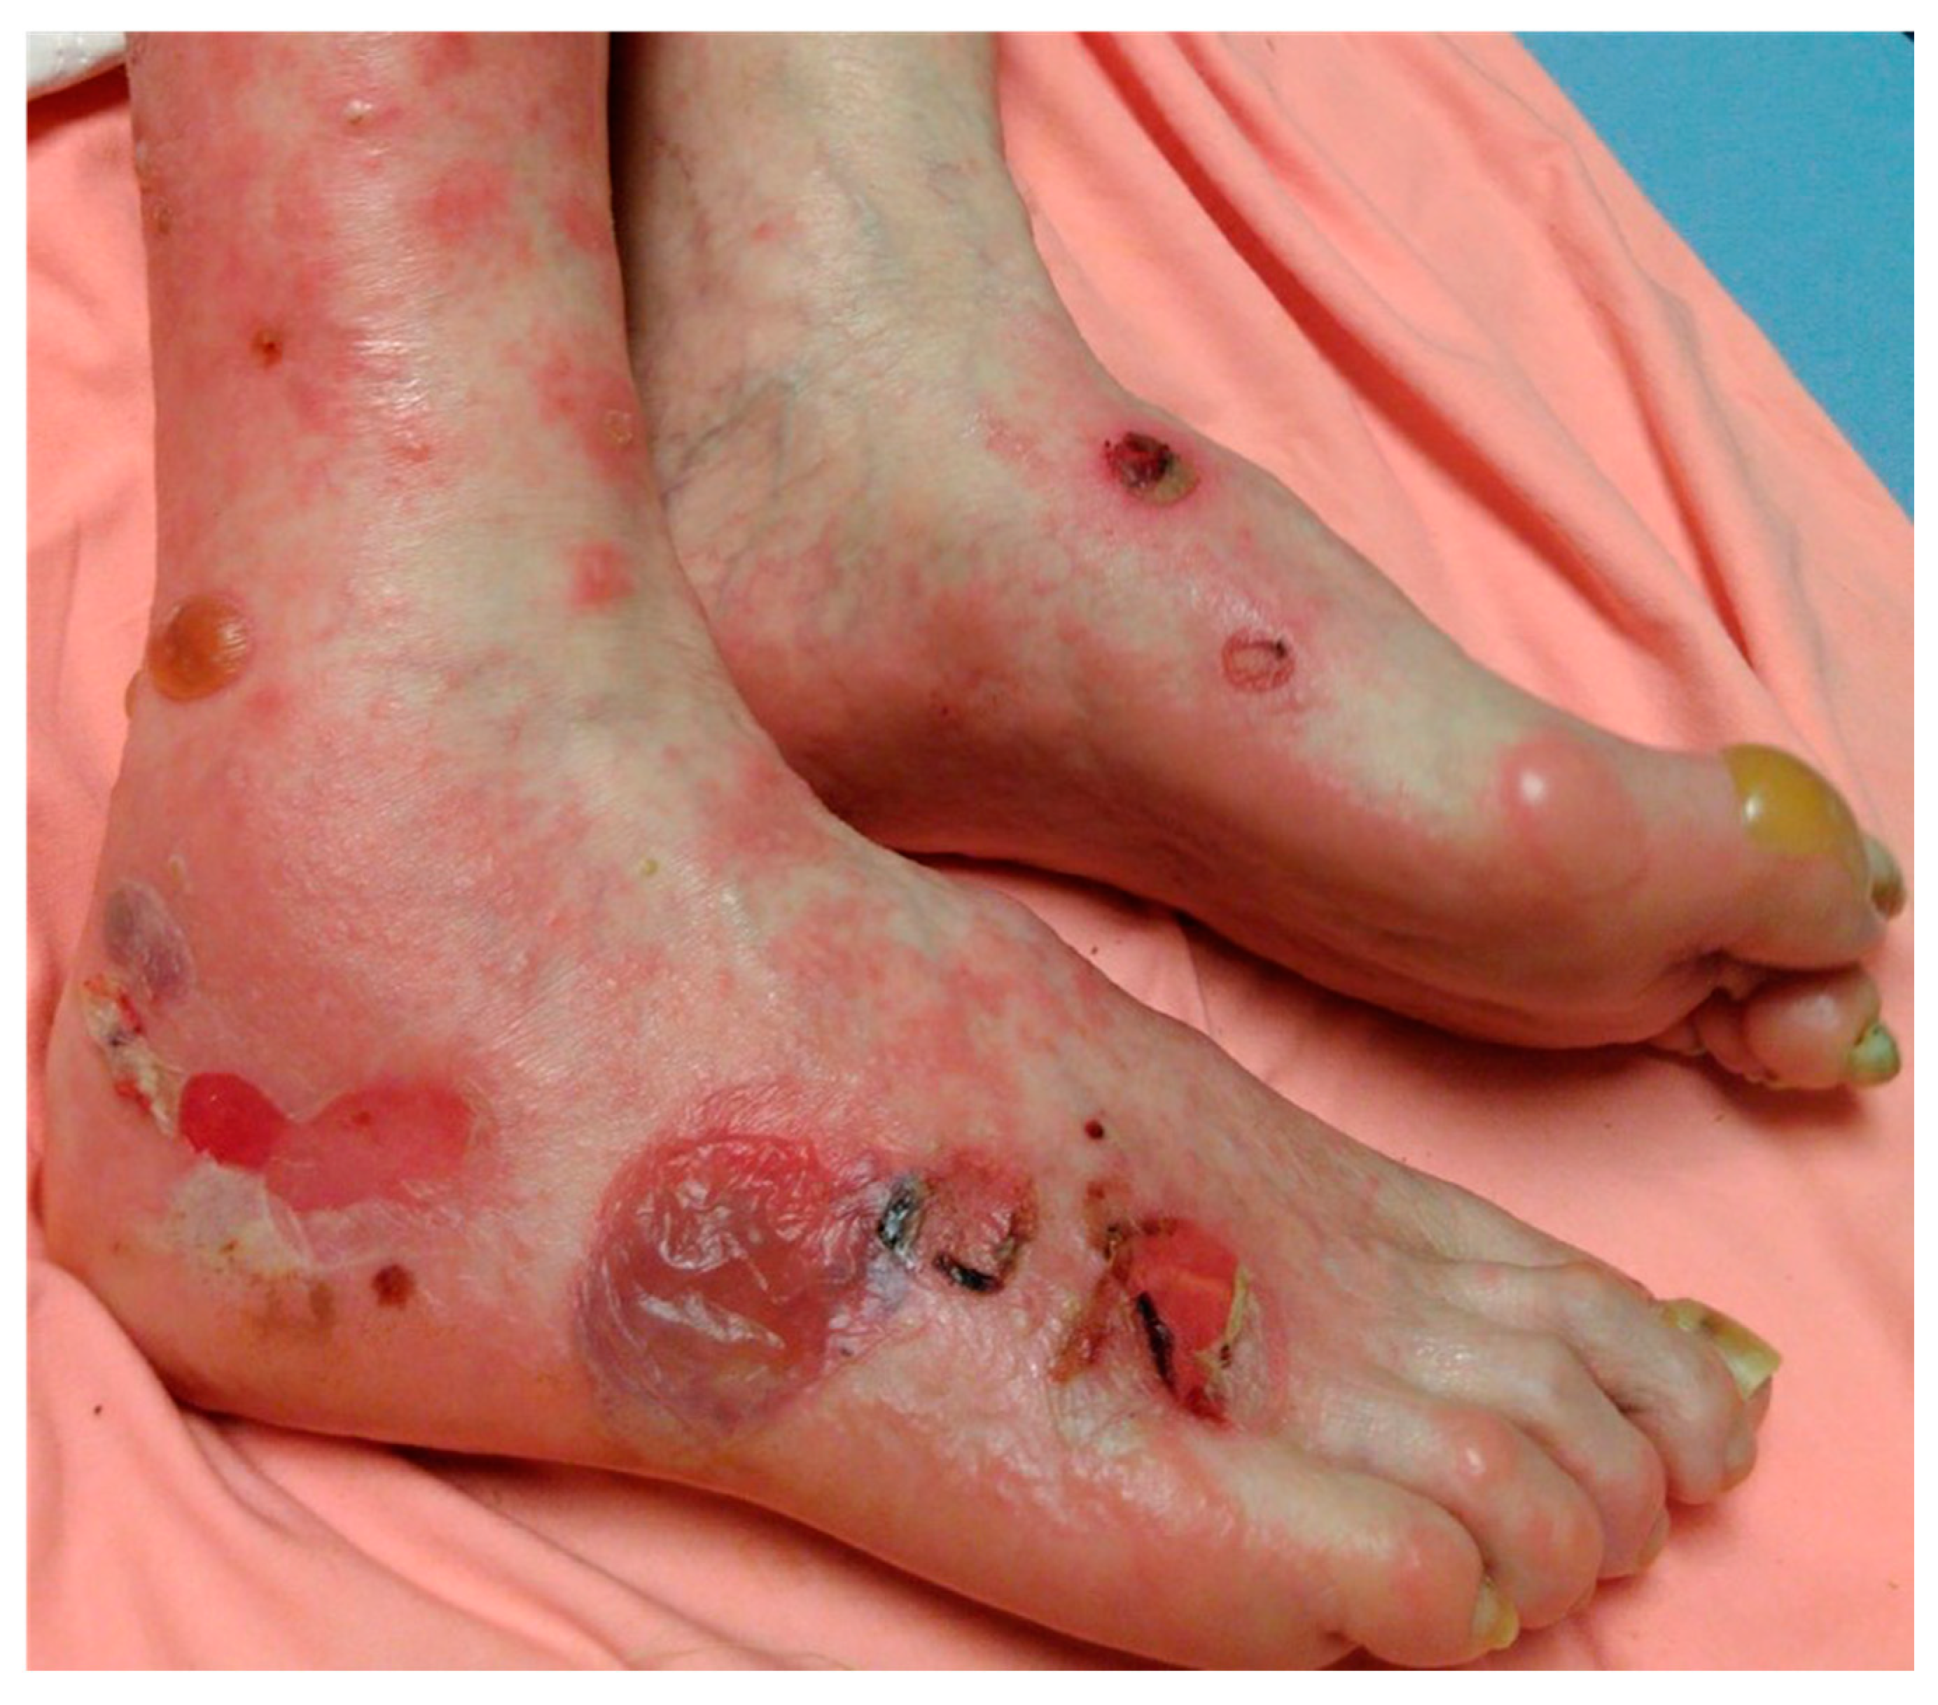 Bullous pemphigoid blisters - Stock Image - C055/9327 - Science Photo  Library